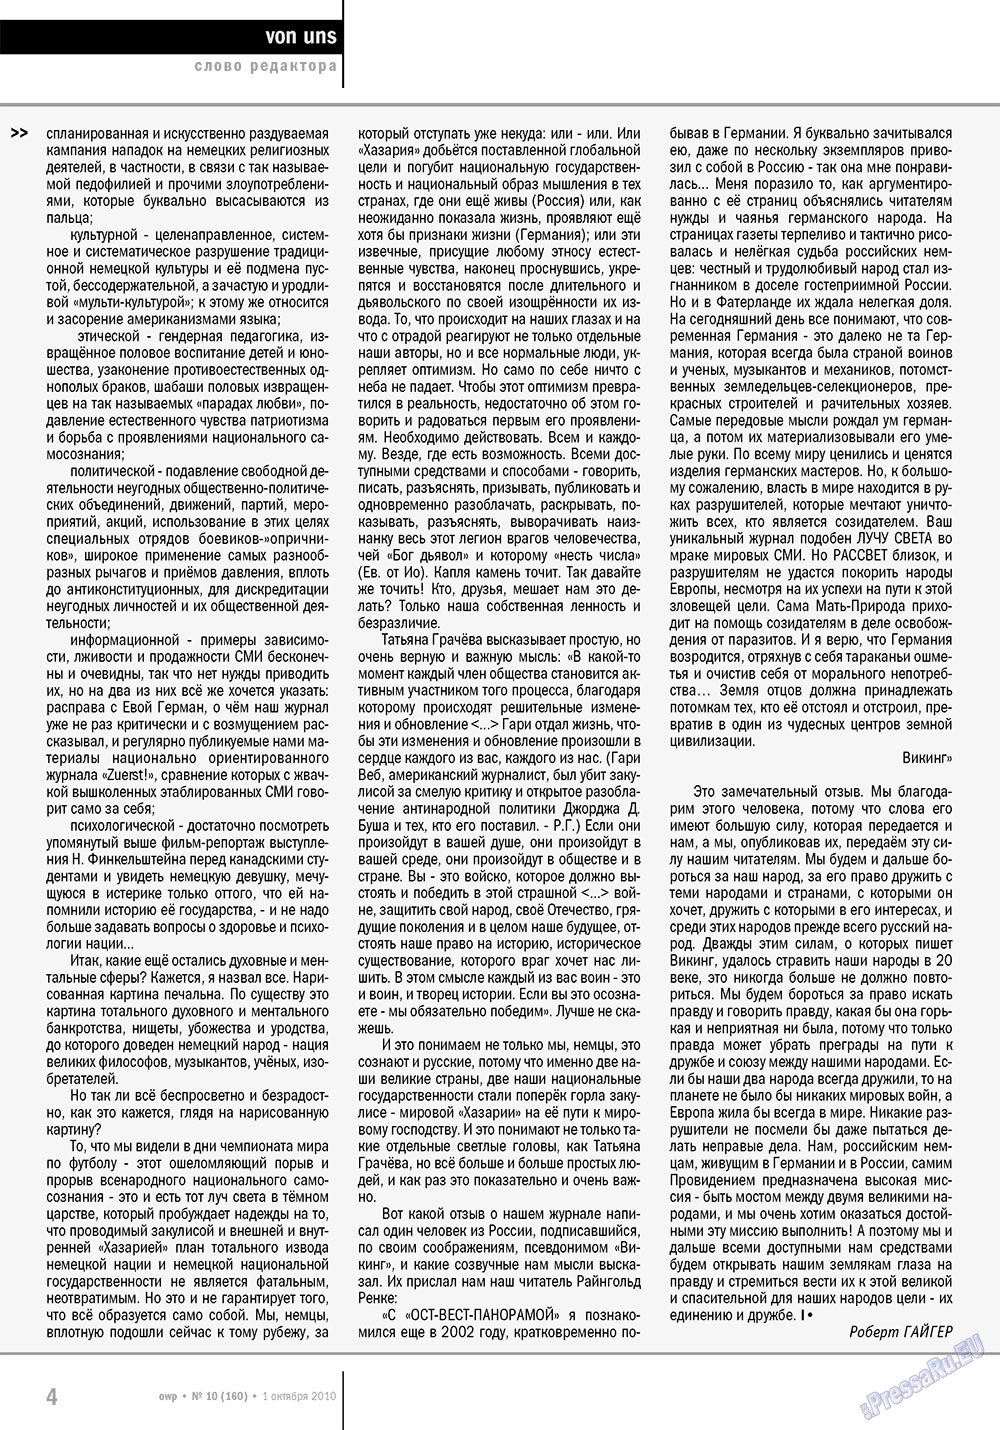 Ost-West Panorama, журнал. 2010 №10 стр.4